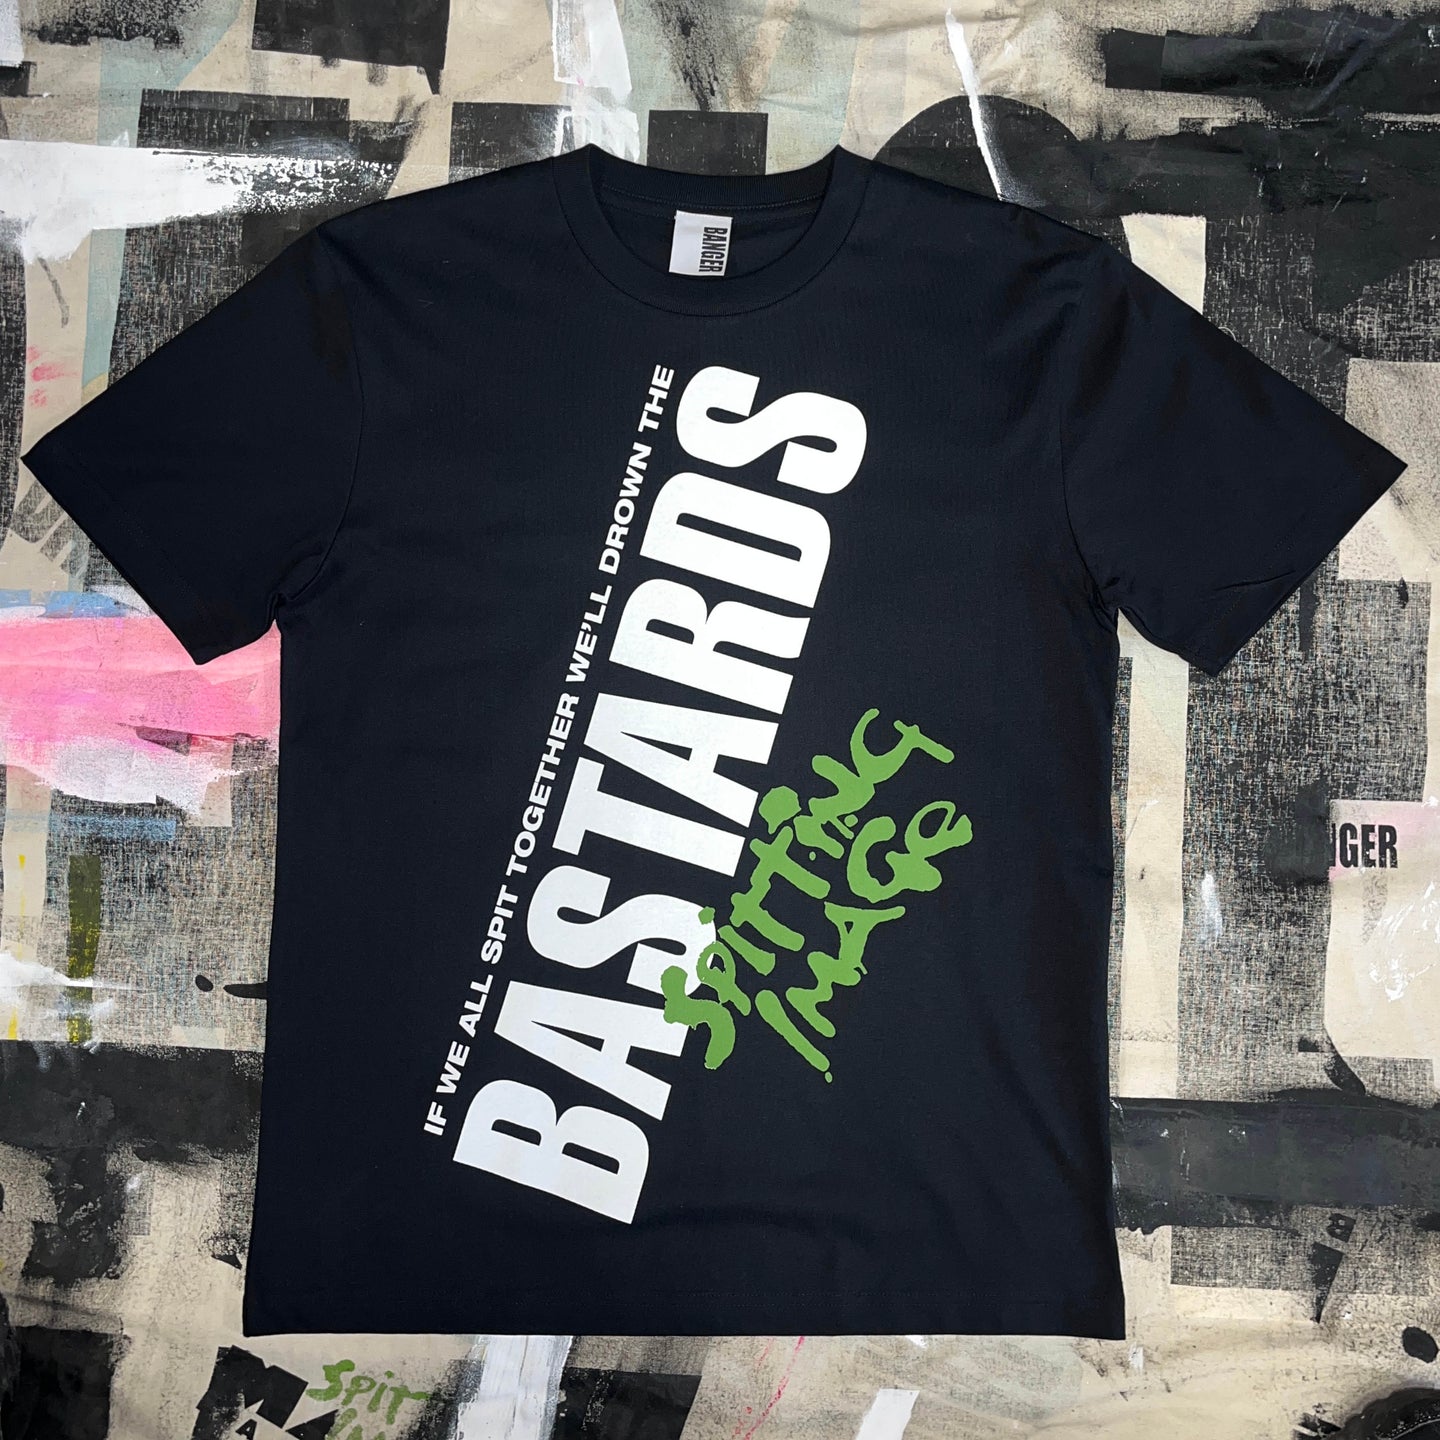 BASTARDS black T-shirt